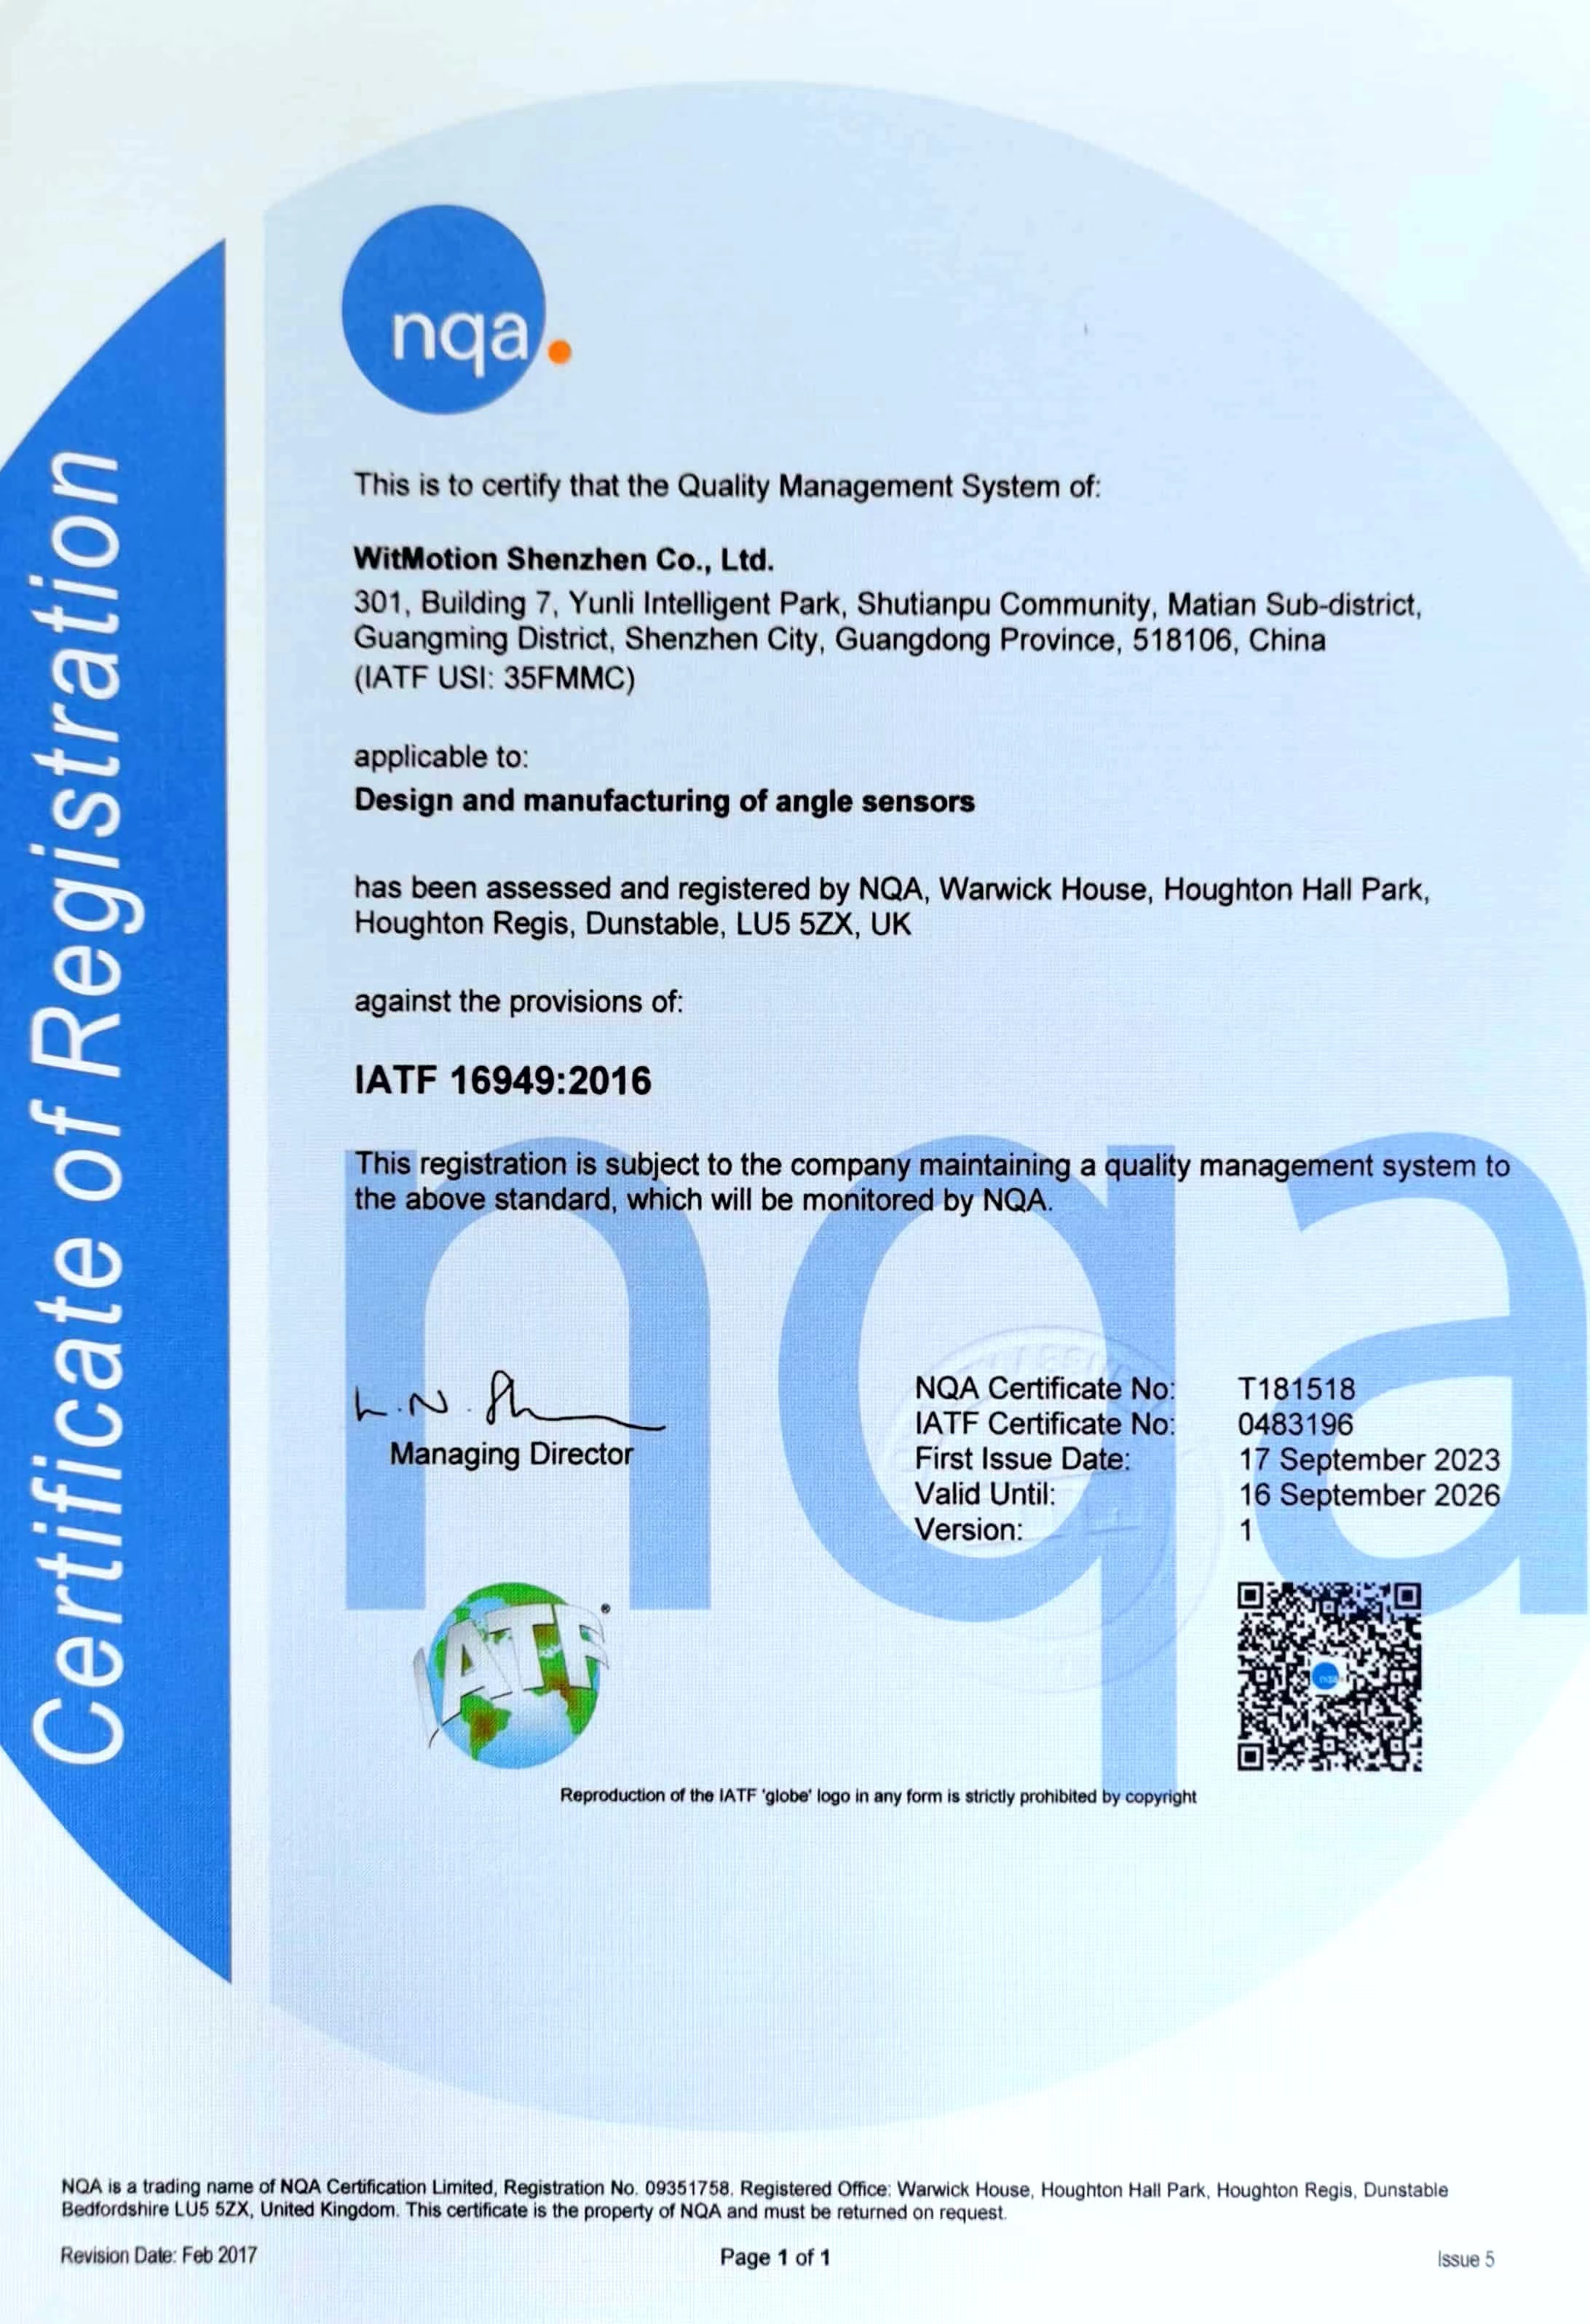 IATF 16949: Automotive Quality Management Systems